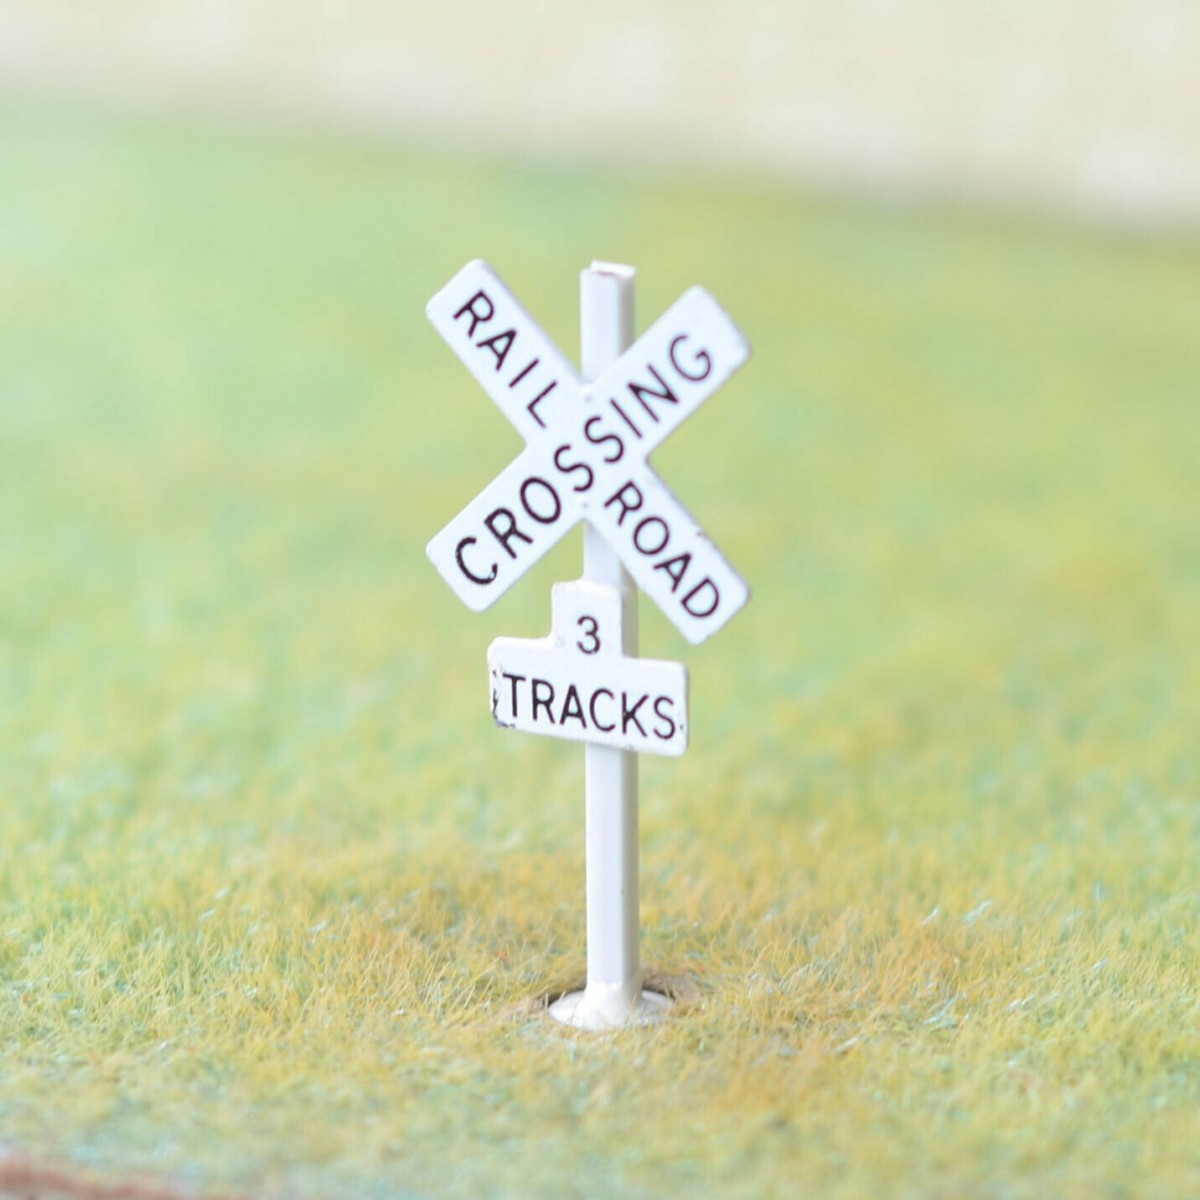 2 x HO scale railroad crossing warning sign CROSSBUCKS 3 tracks signal #3T